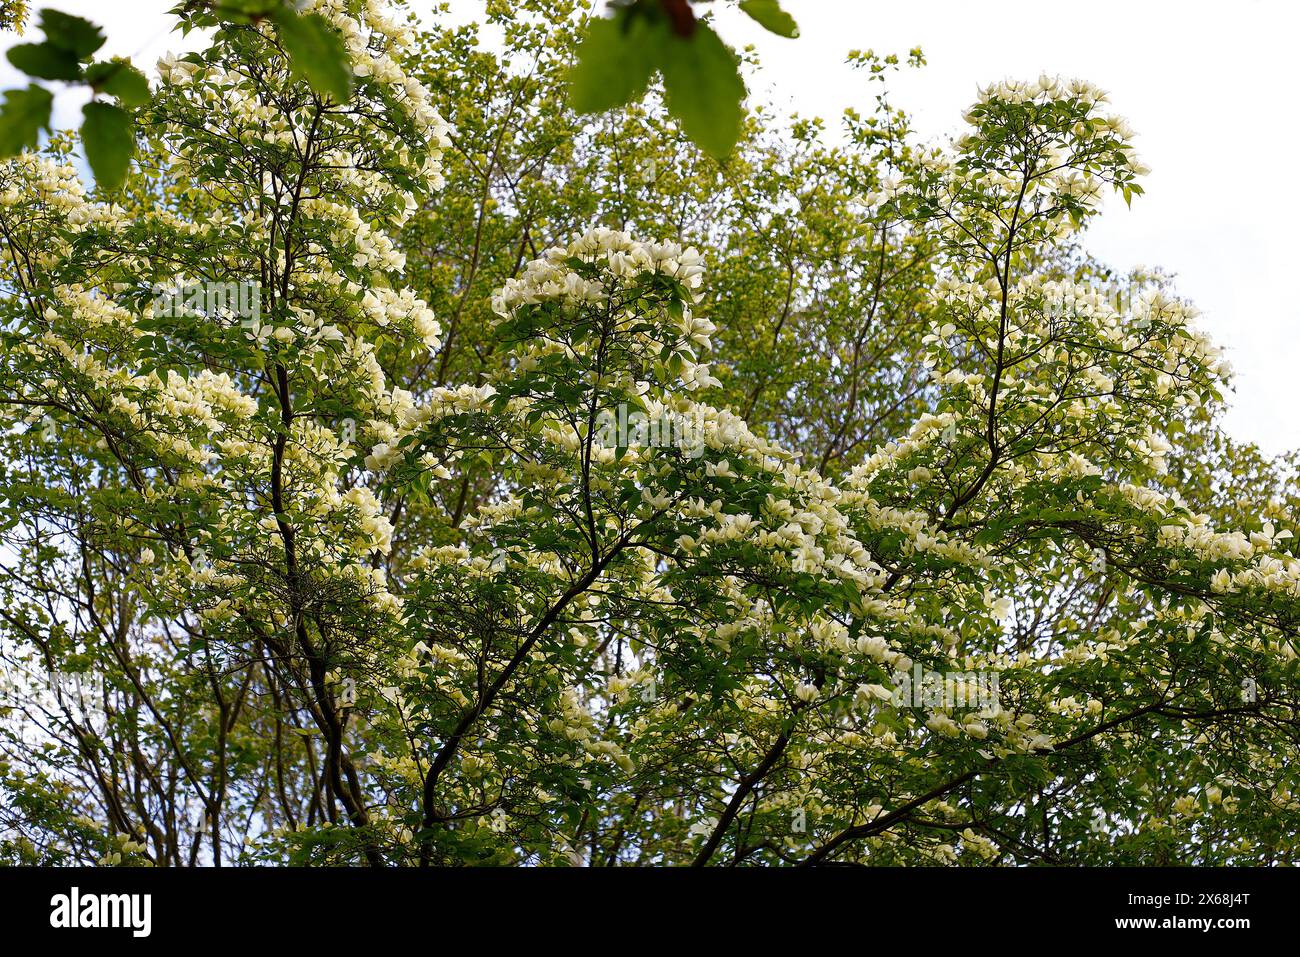 White green flowers of the small garden tree cornus ruth ellen rutlan. Stock Photo